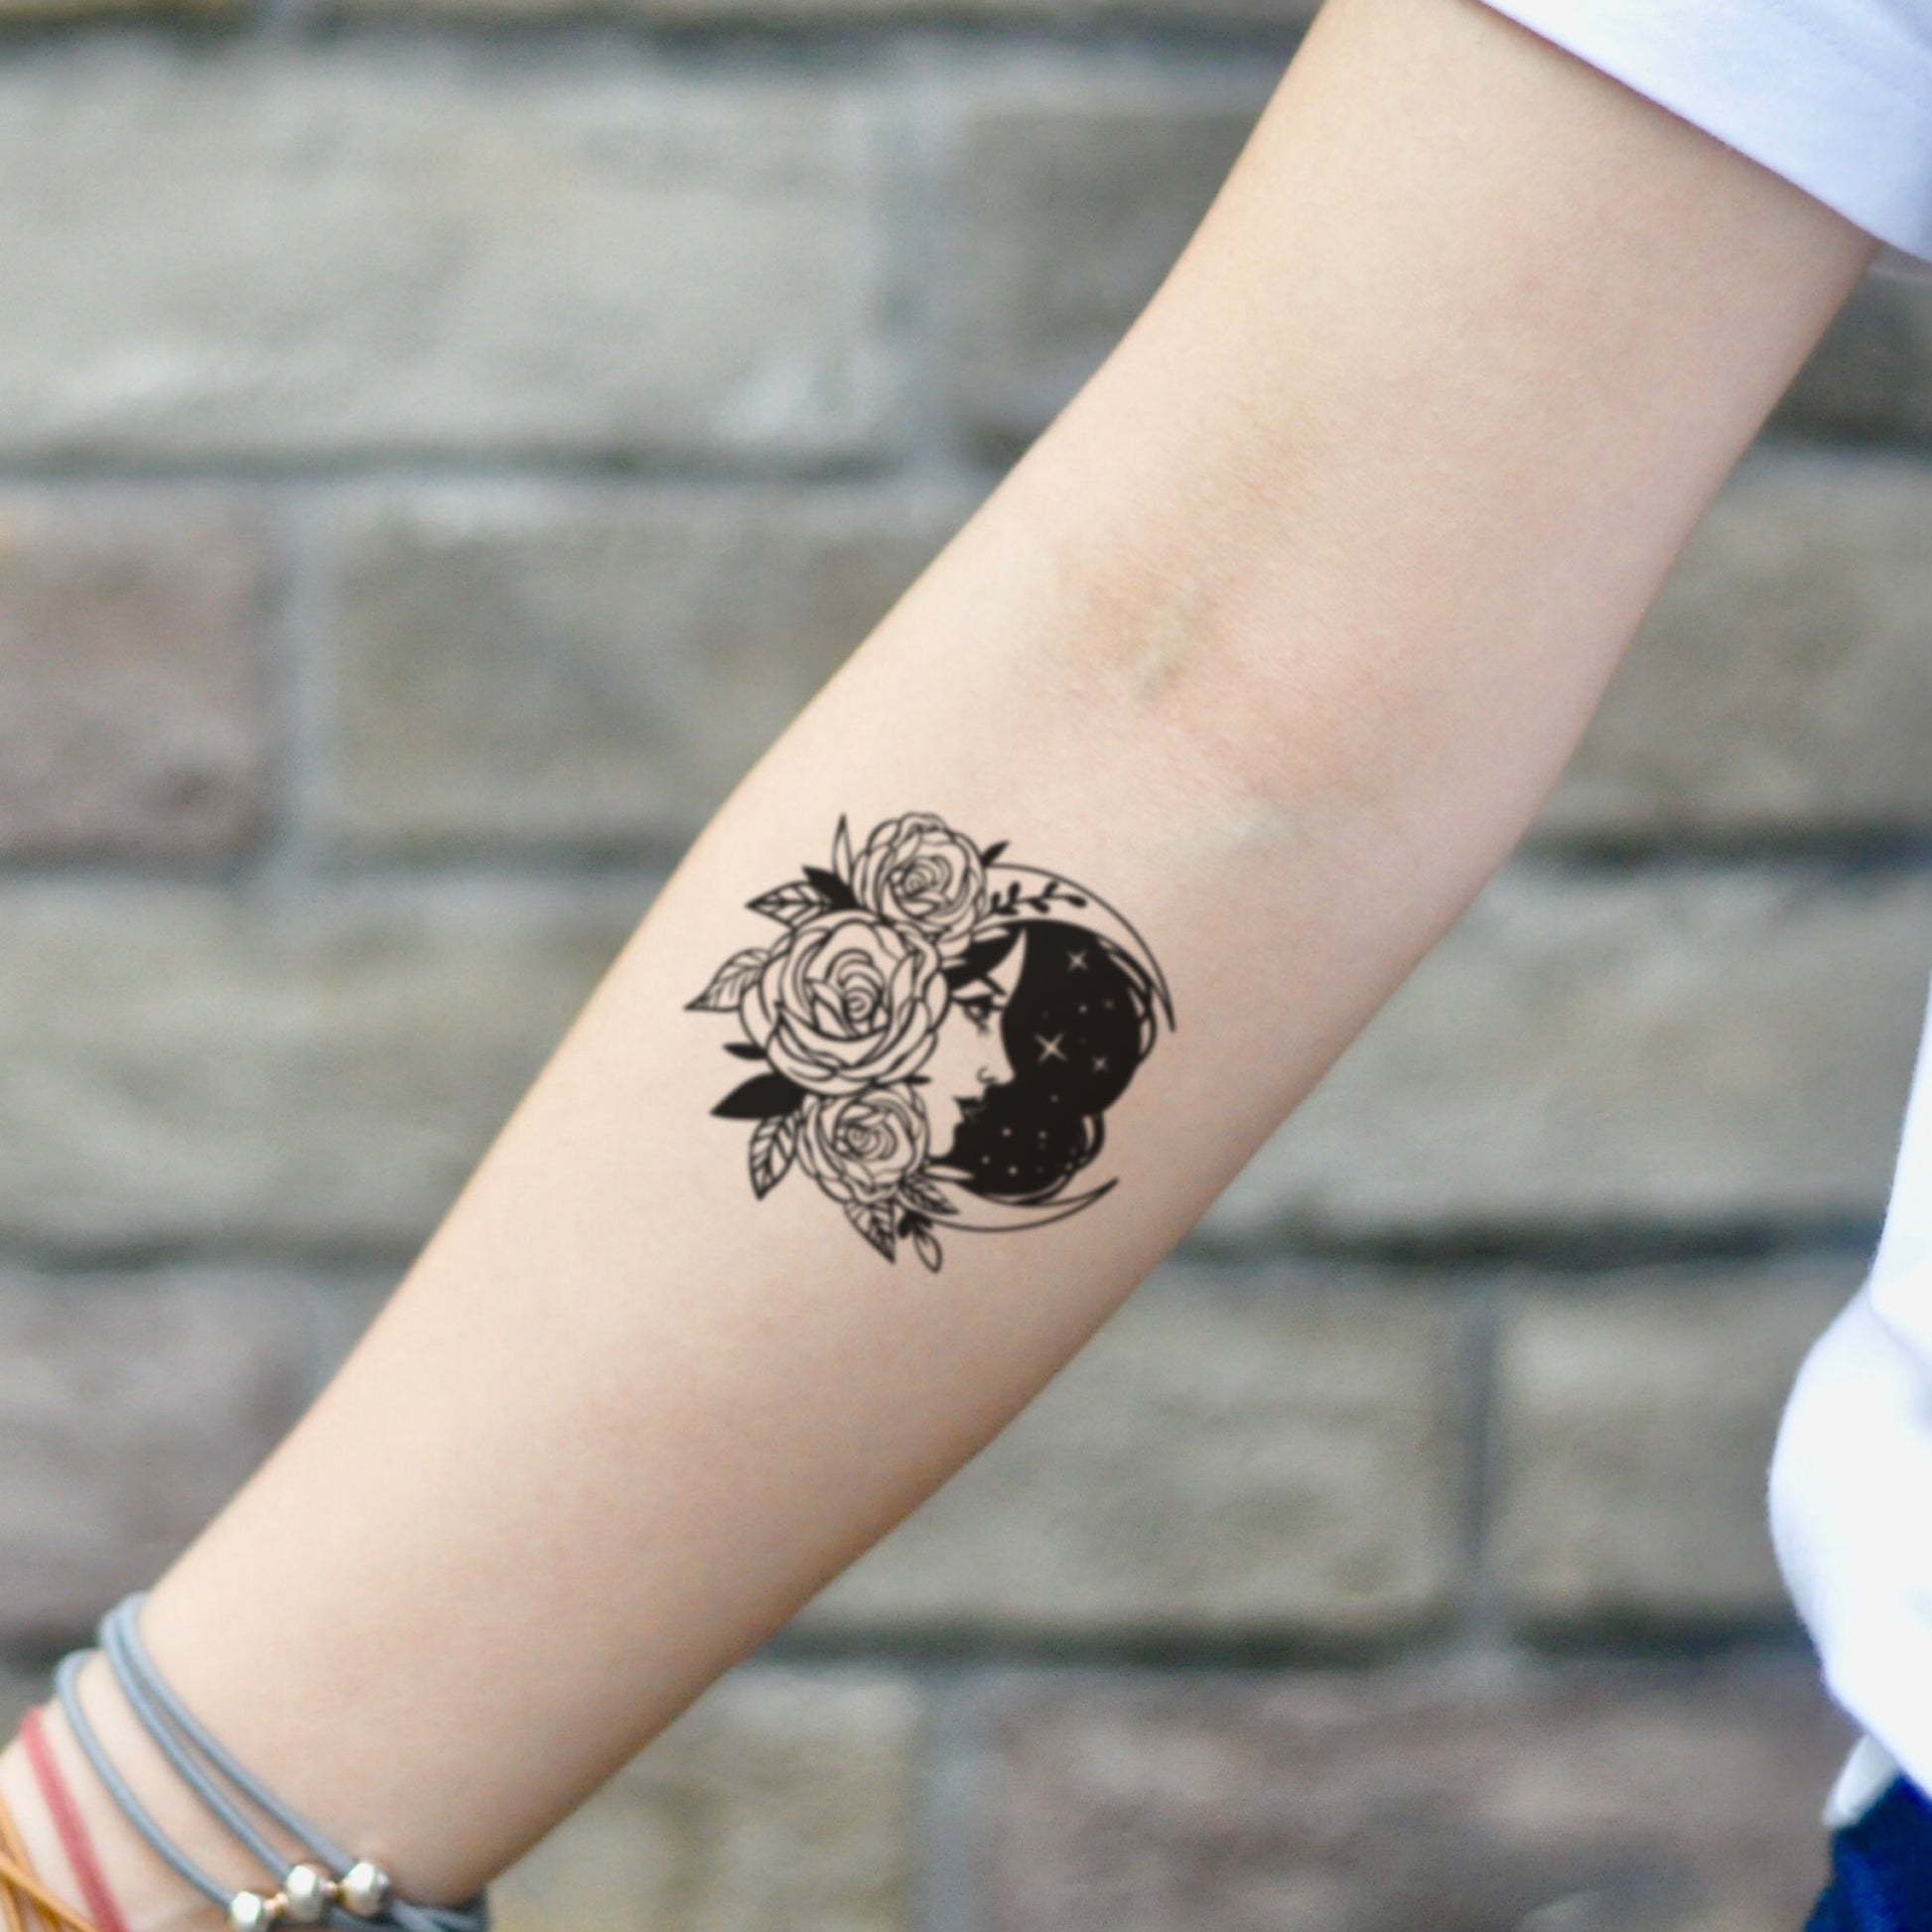 fake small moon, stars and rose illustrative temporary tattoo sticker design idea on inner arm